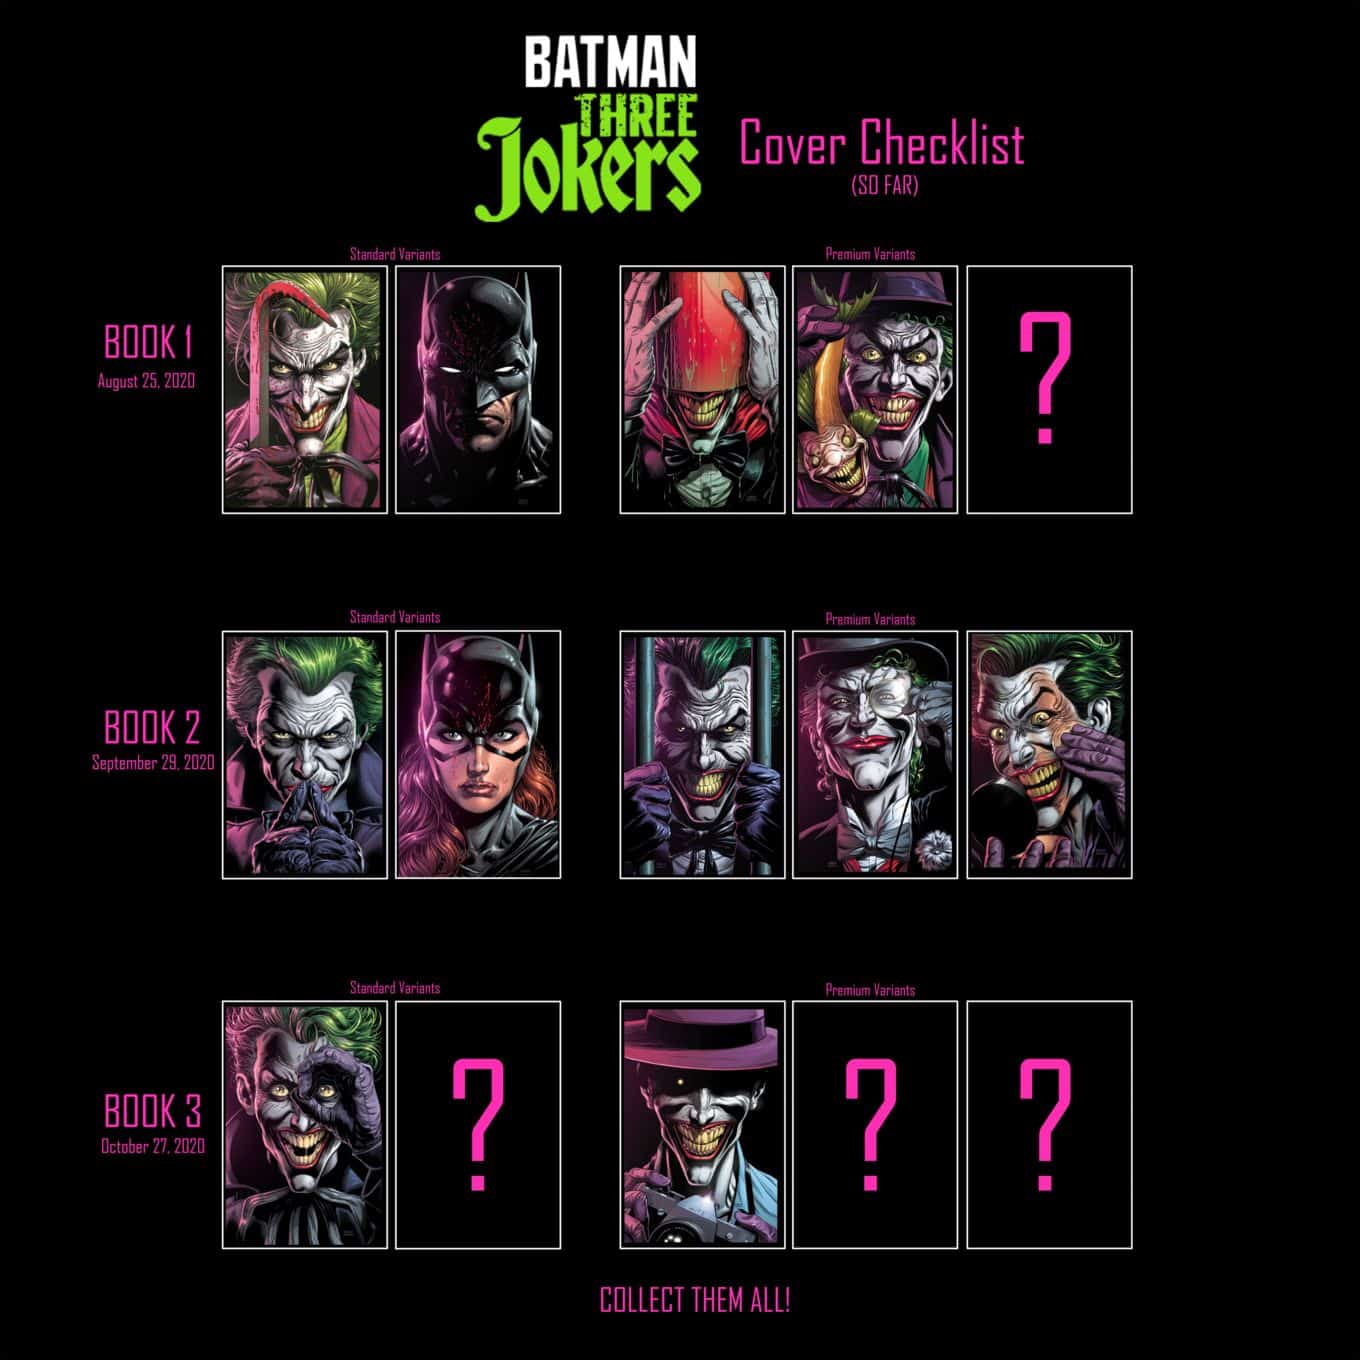 Batman Thee Jokers covers variant checklist | Inside Pulse